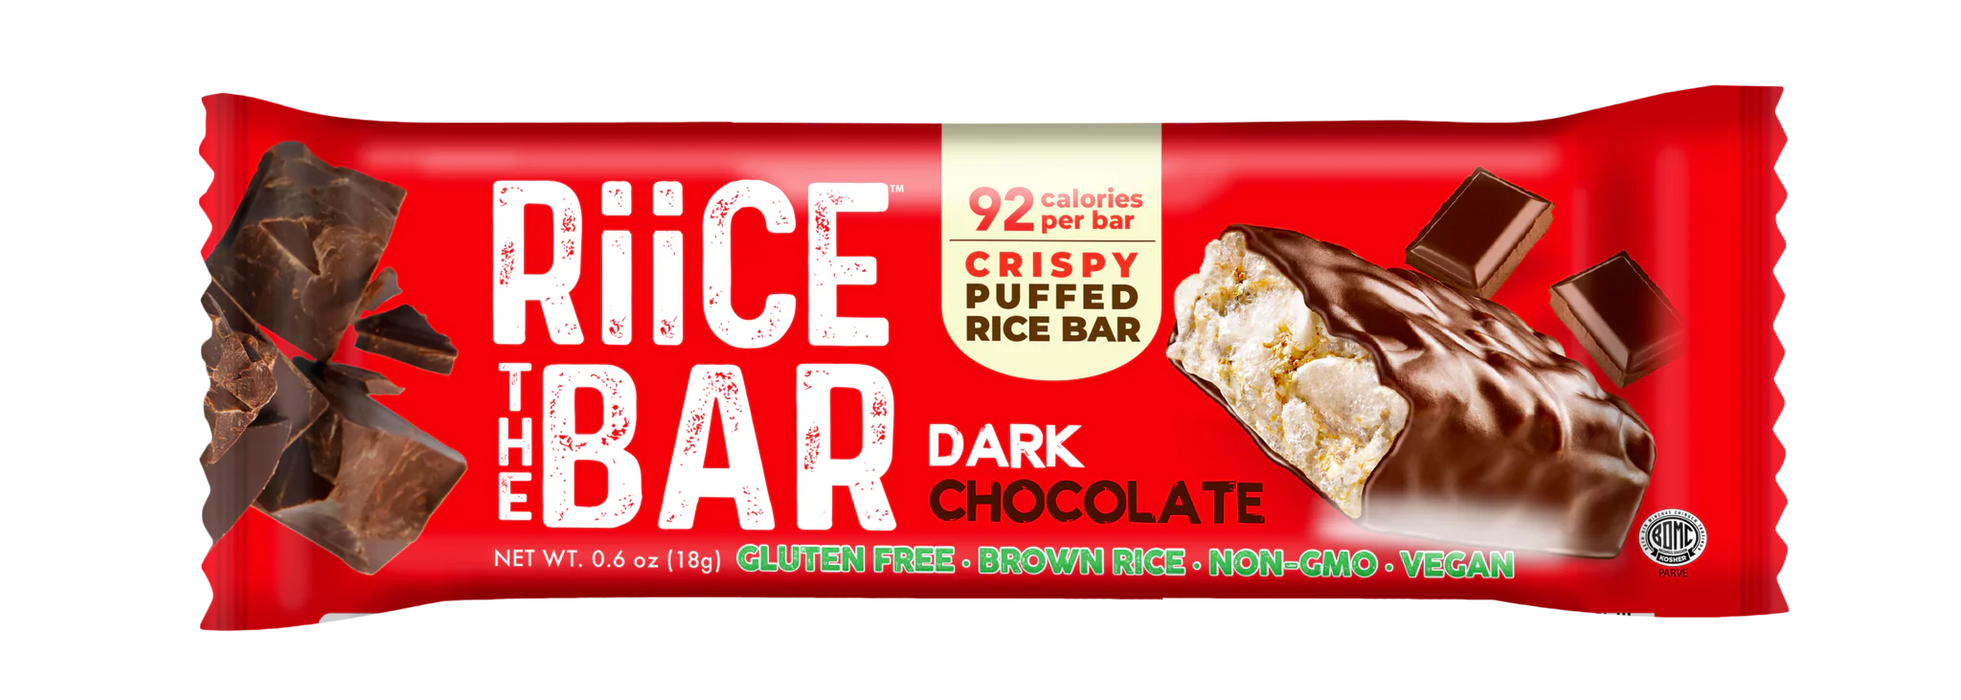 RiiCE THE BAR Chocolate - Box of 5 Bars x 18g, Gluten-Free, Brown Rice, Non-GMO, Vegan